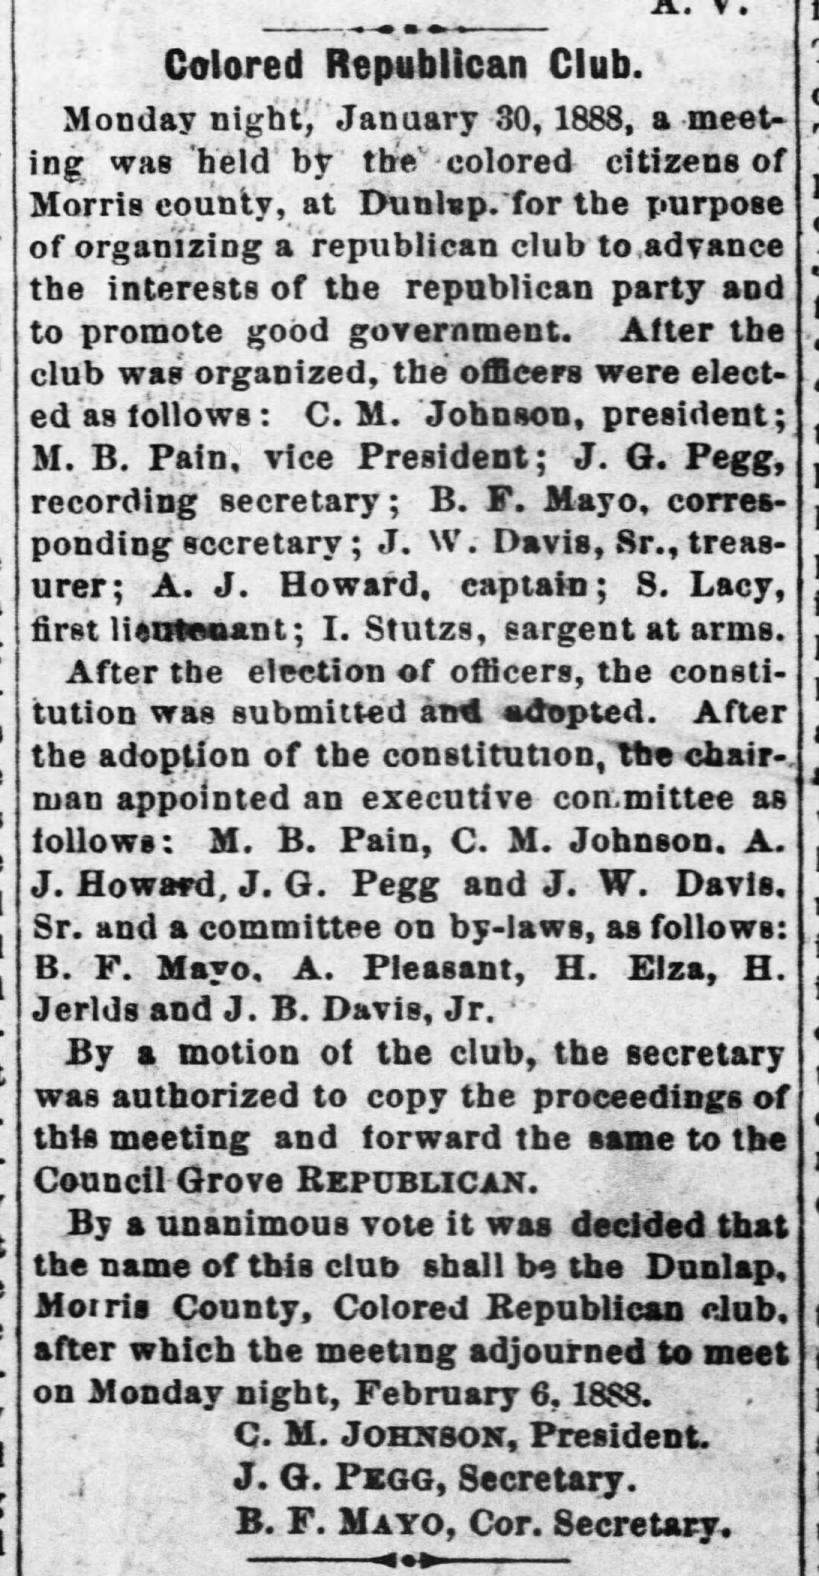 Colored Republican Club, The Council Grove Republican (Council Grove, Kansas) 3 Feb 1888, page 1